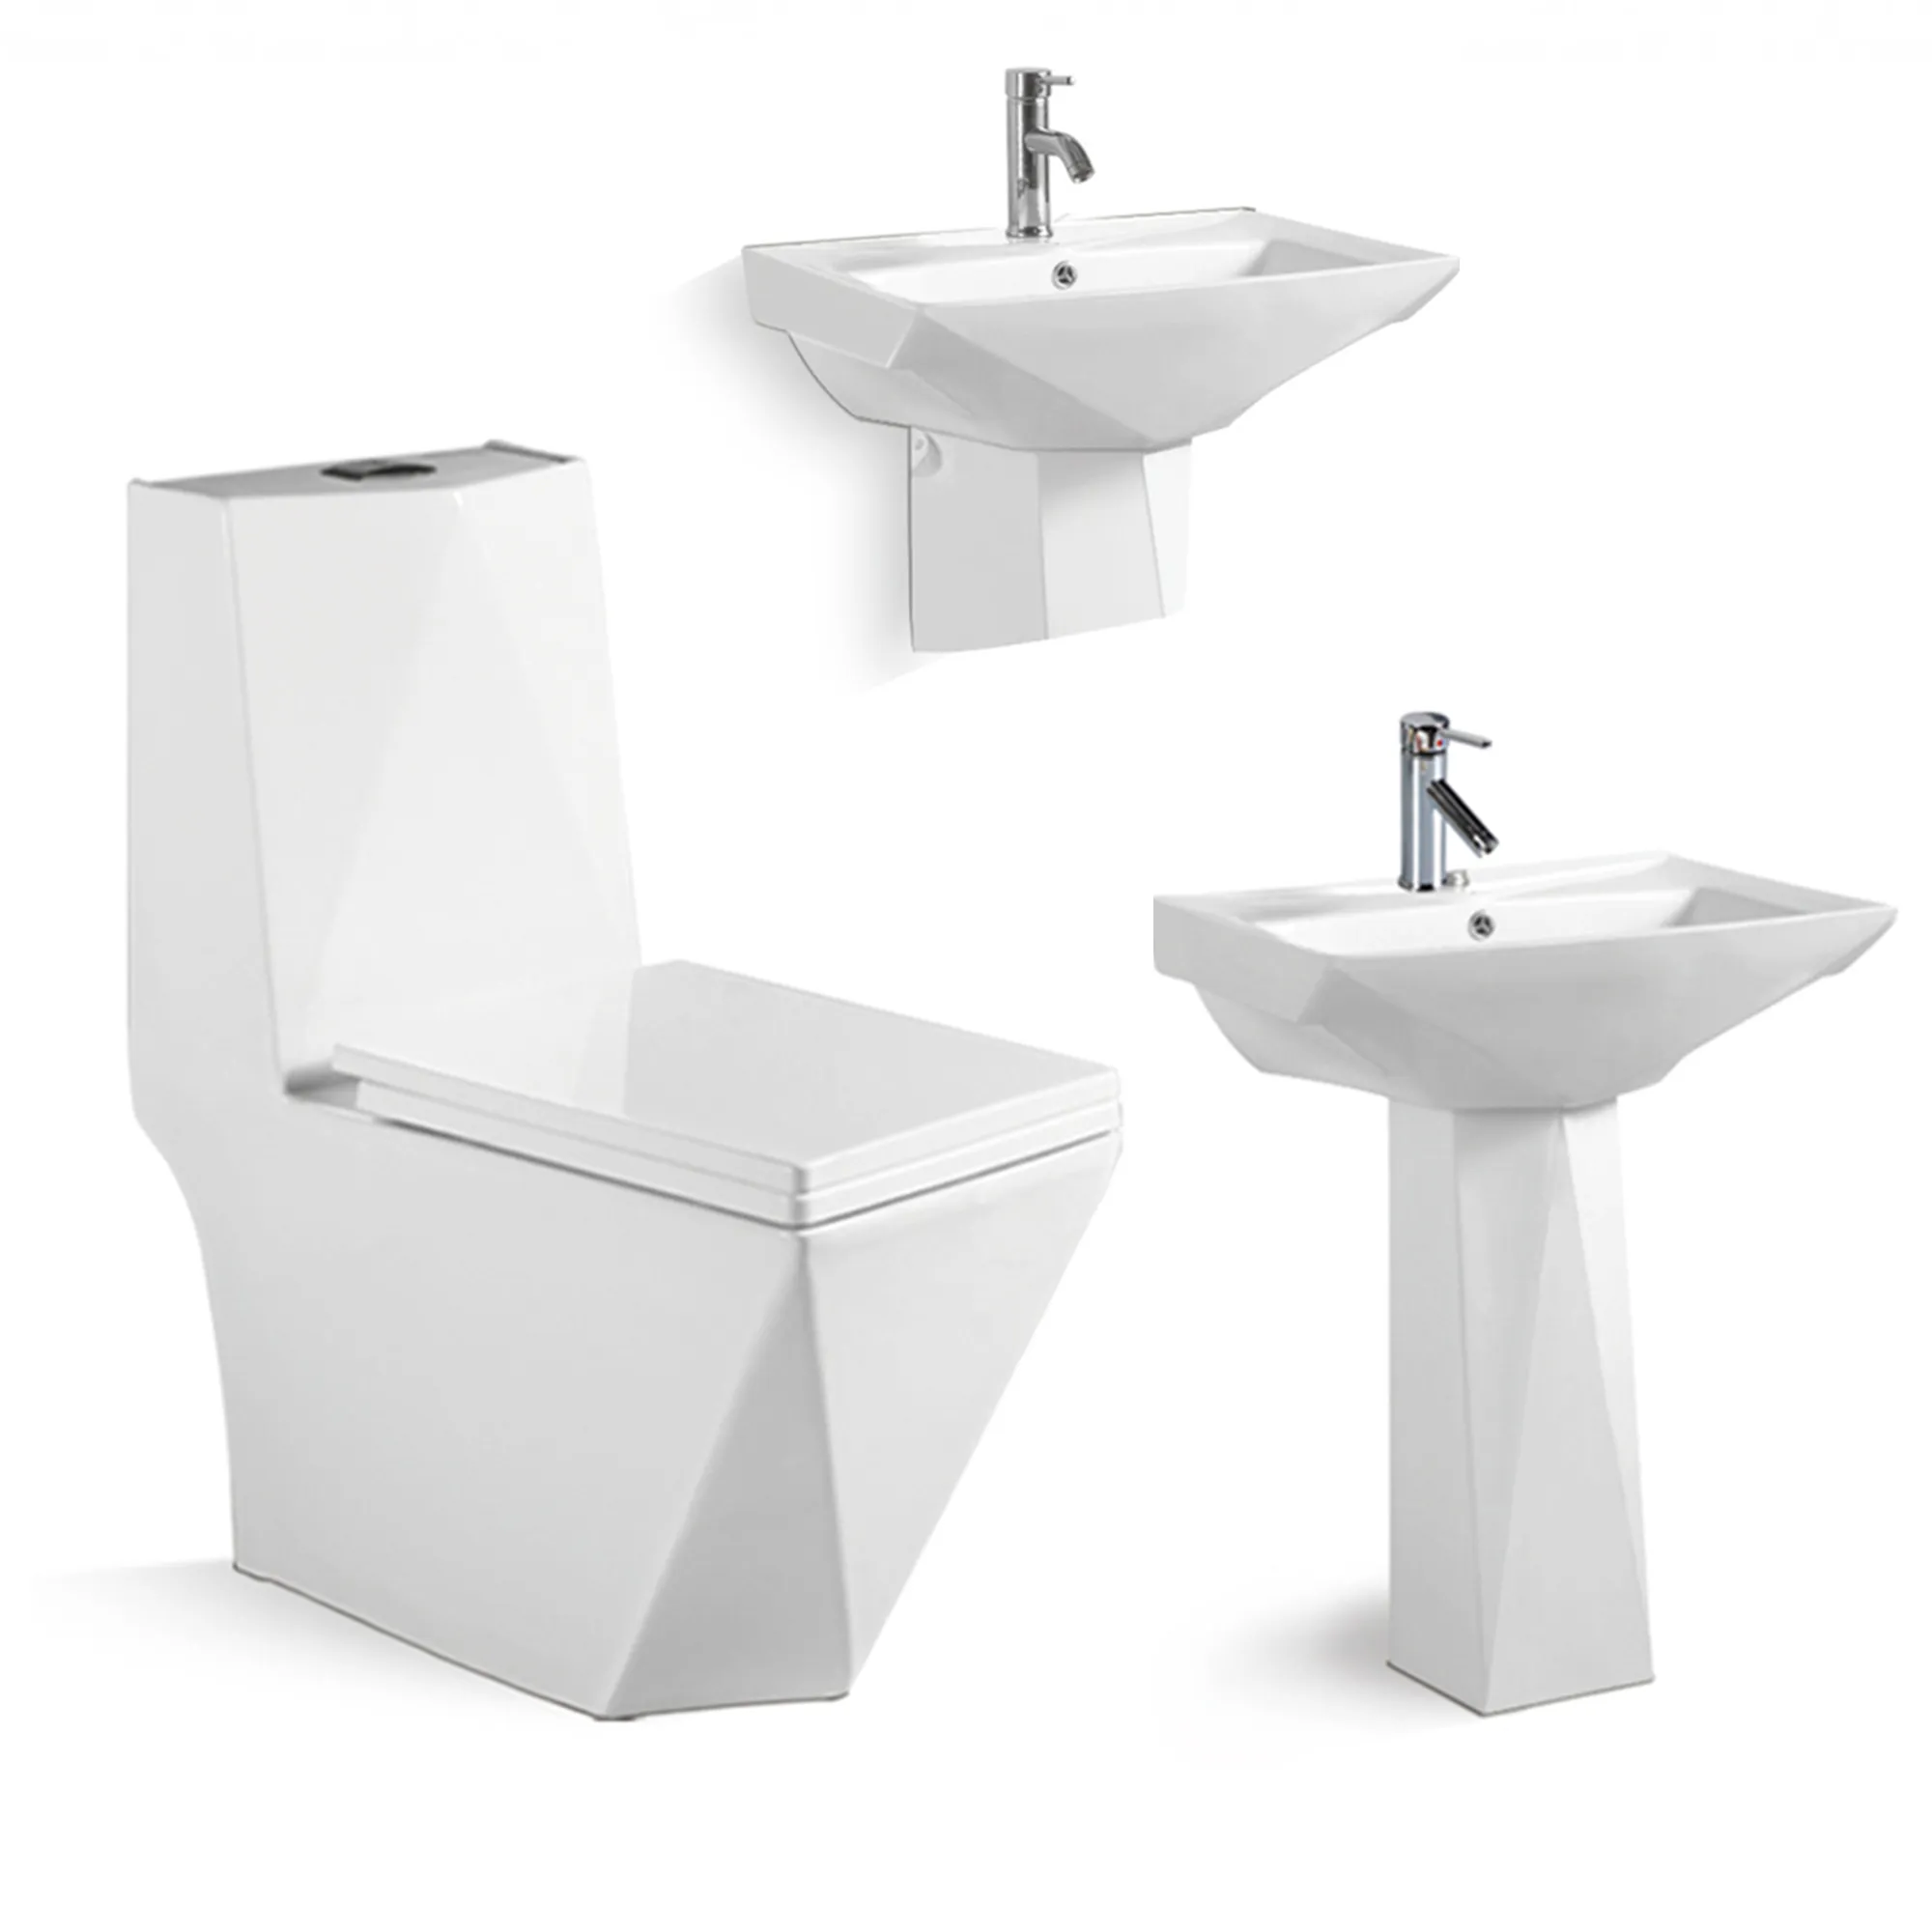 First-A5155 Sanitär keramik Badezimmer keramik einteilige WC-Toilette